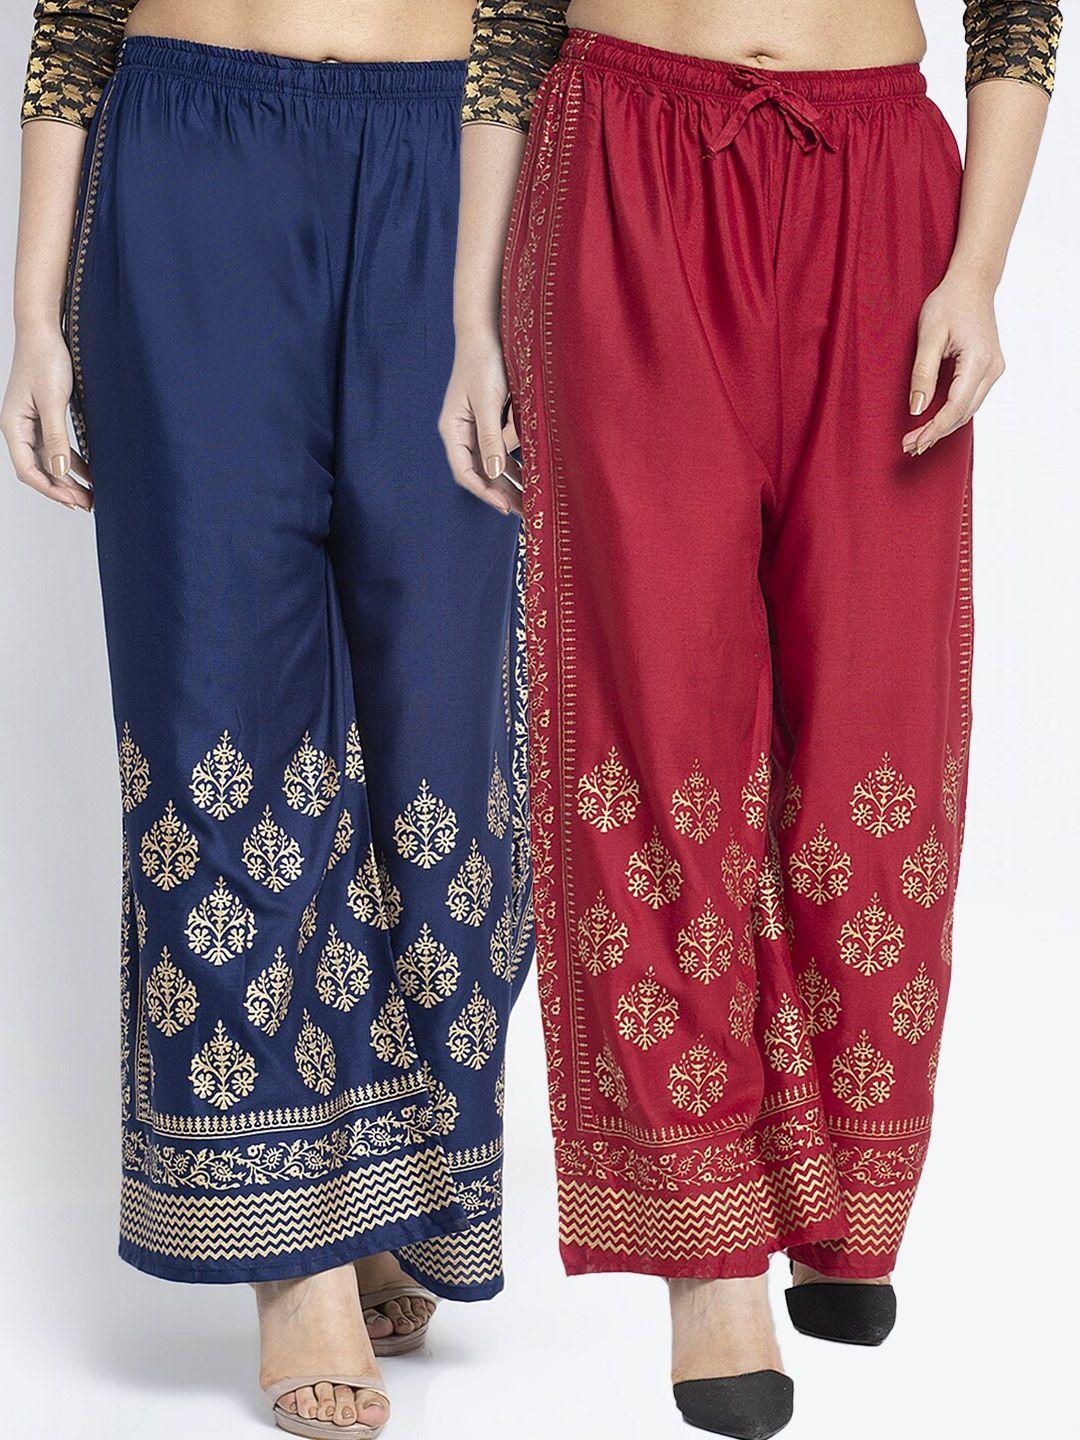 jinfo women maroon & navy blue set of 2 ethnic motifs printed flared ethnic palazzos